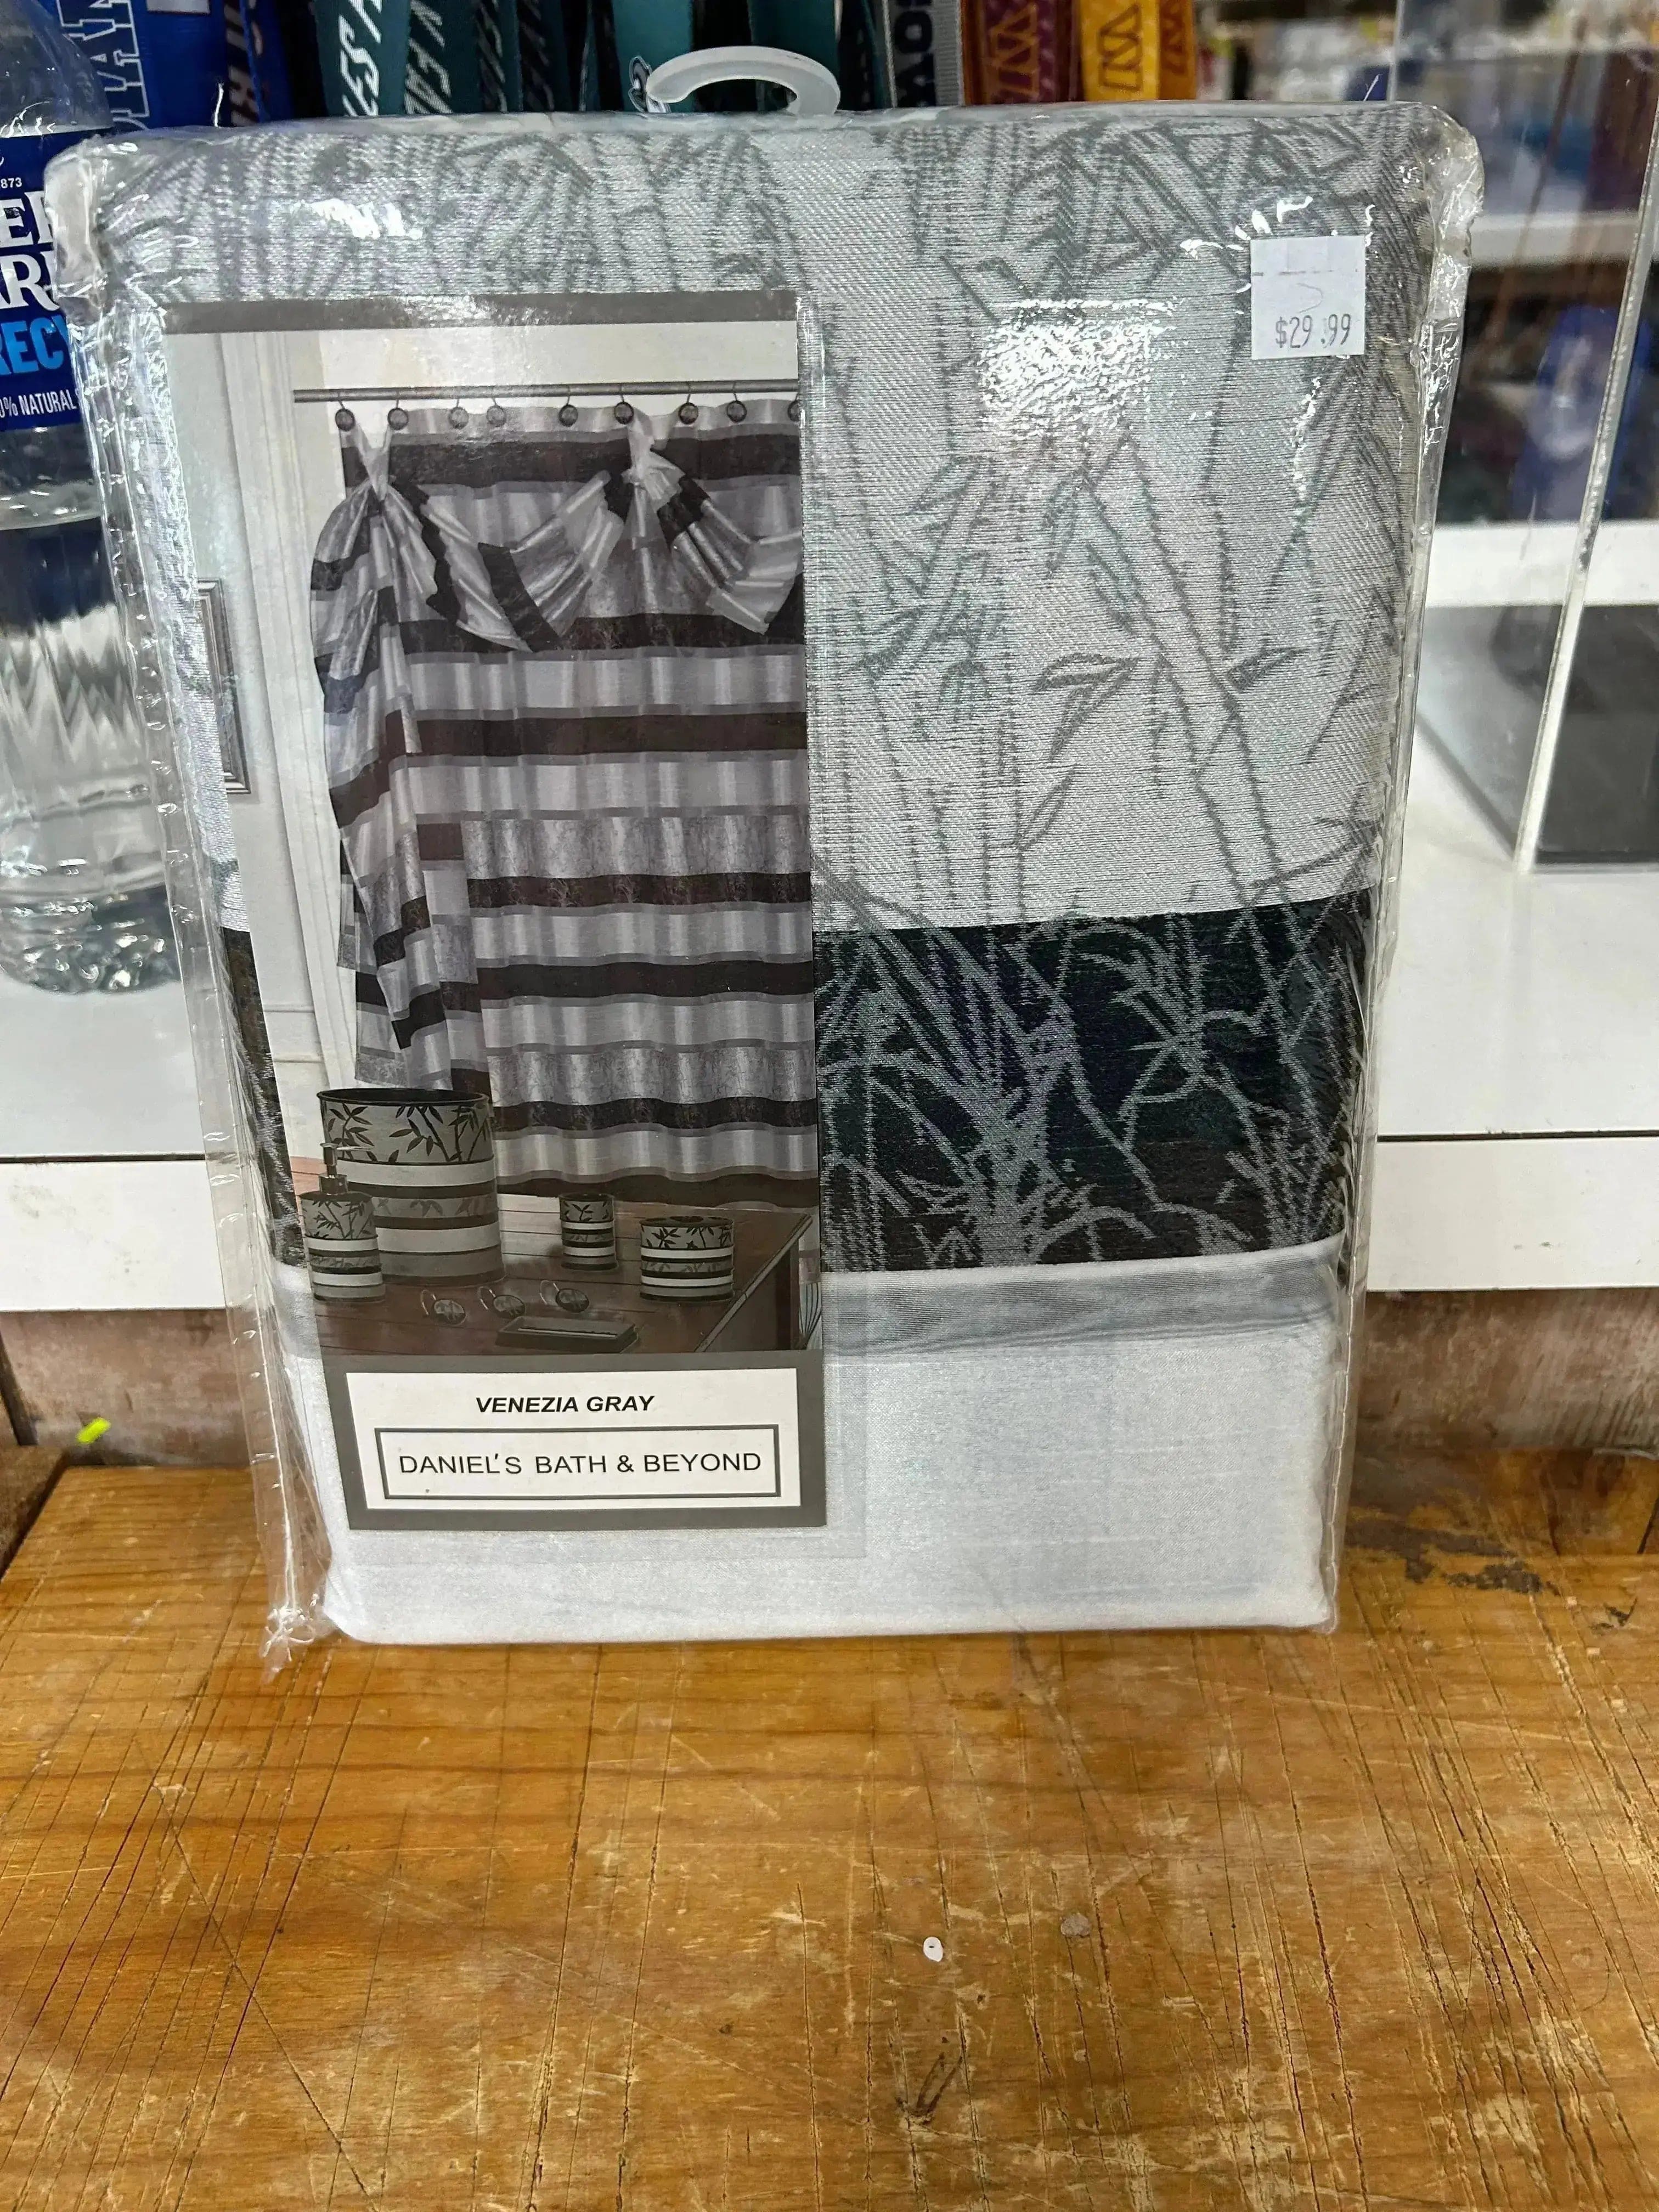 Linen World Venezia Gray Shower Curtain with Scarf